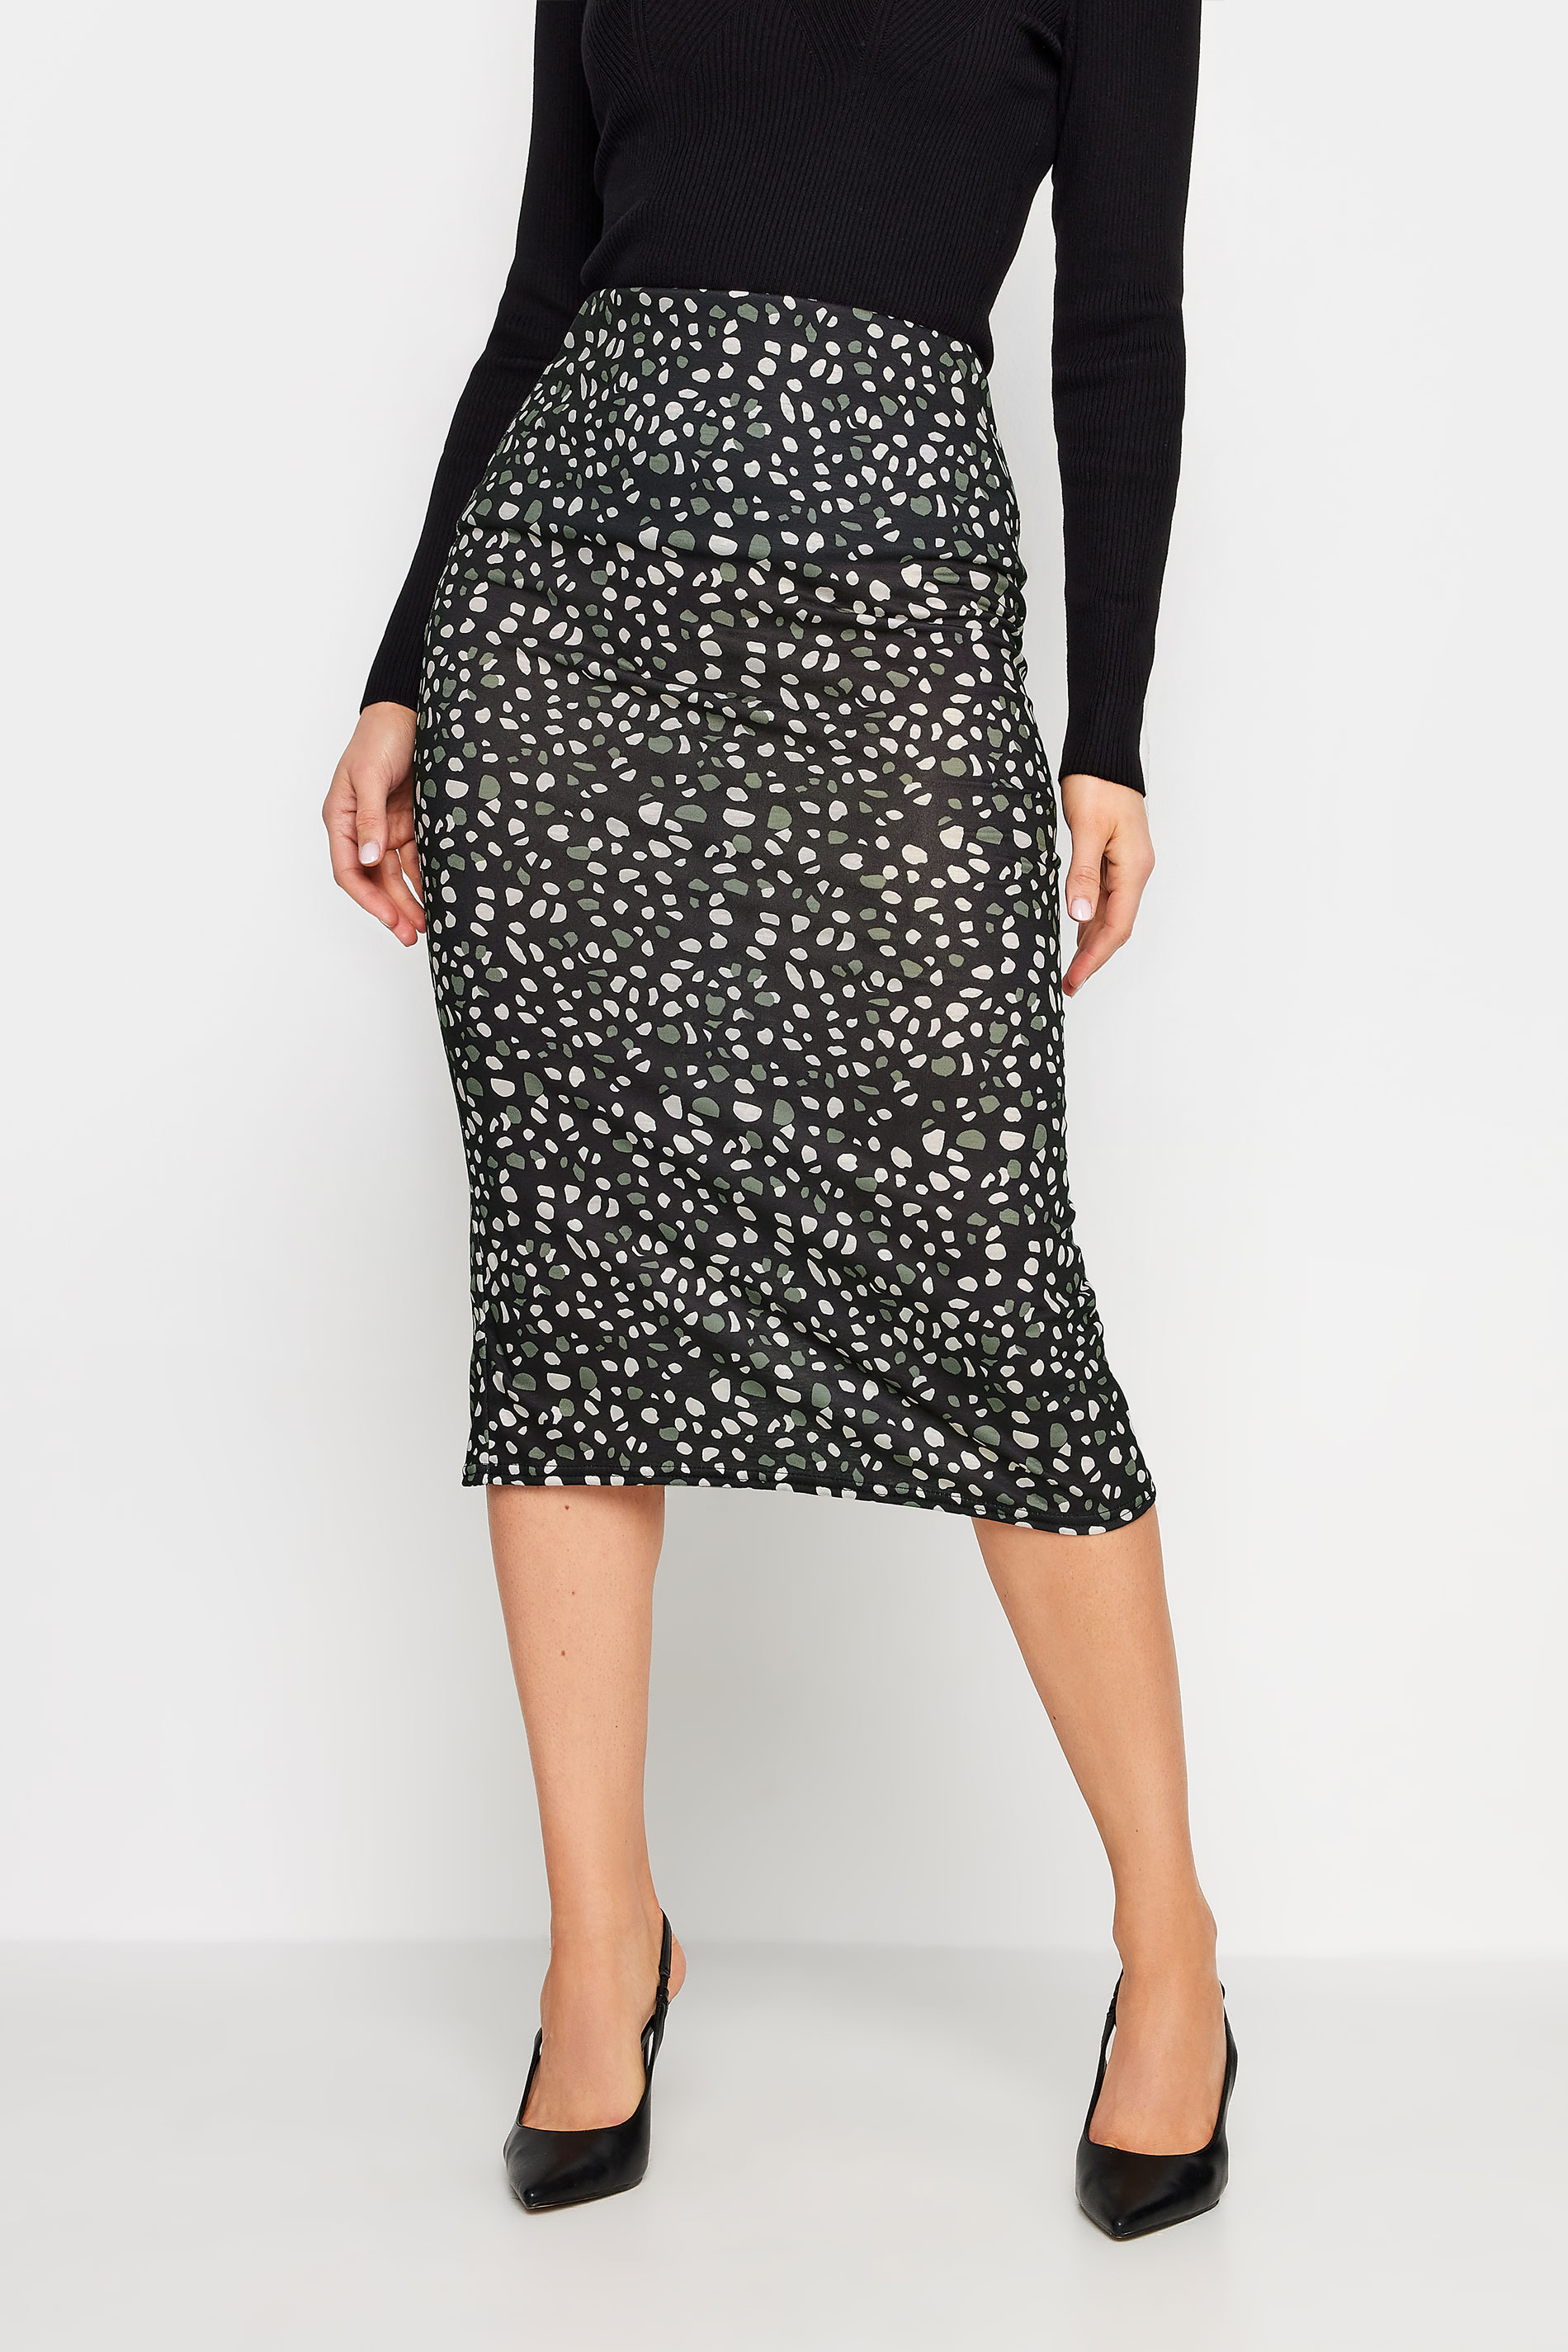 LTS Tall Womens Black Abstract Spot Print Midi Skirt | Long Tall Sally 3